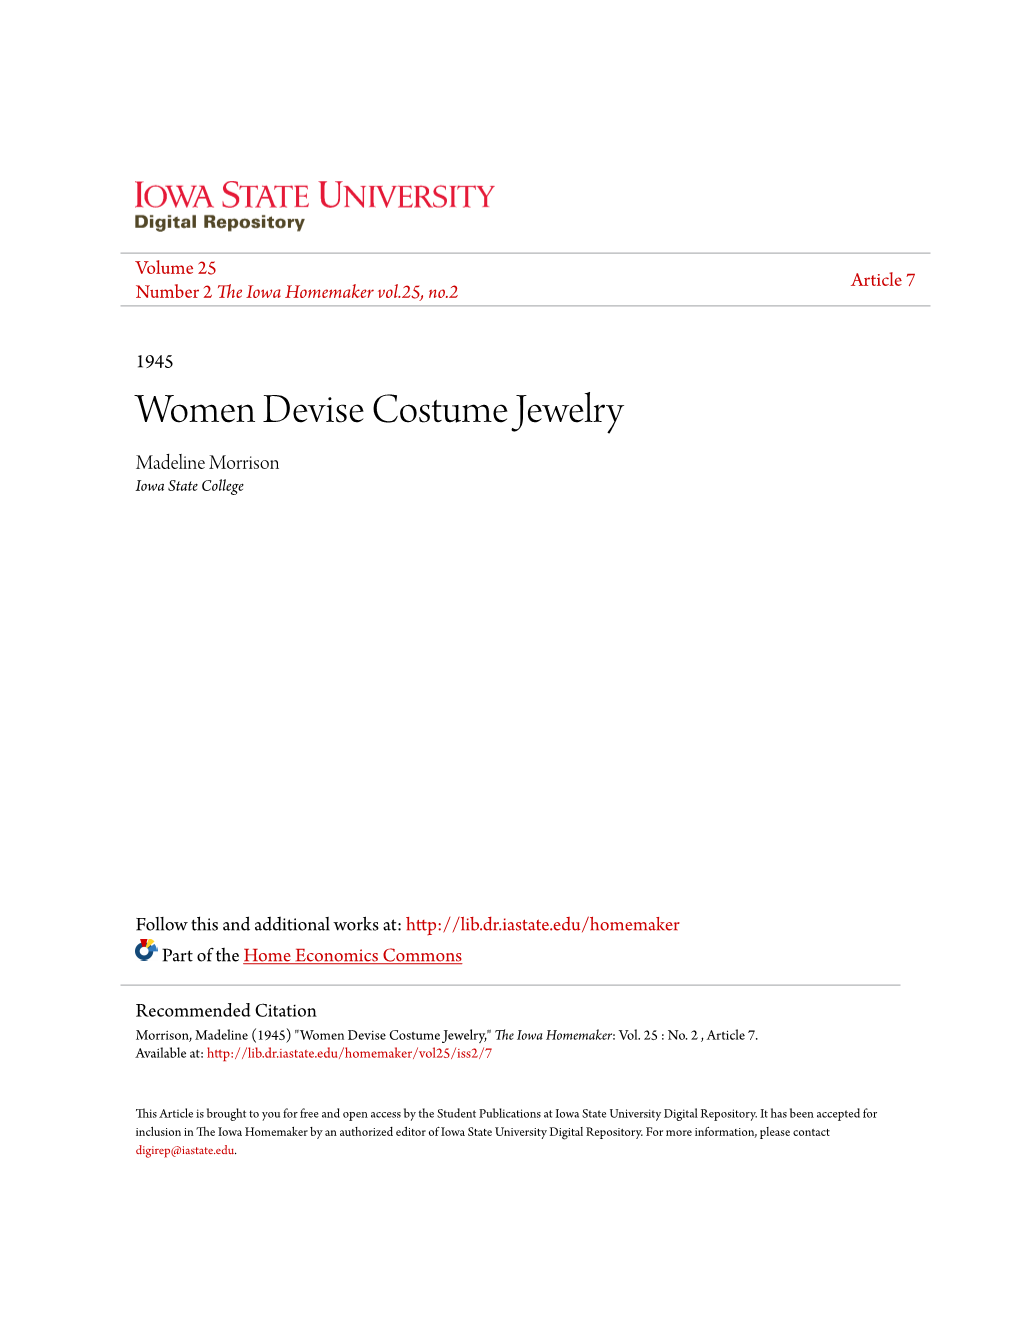 Women Devise Costume Jewelry Madeline Morrison Iowa State College